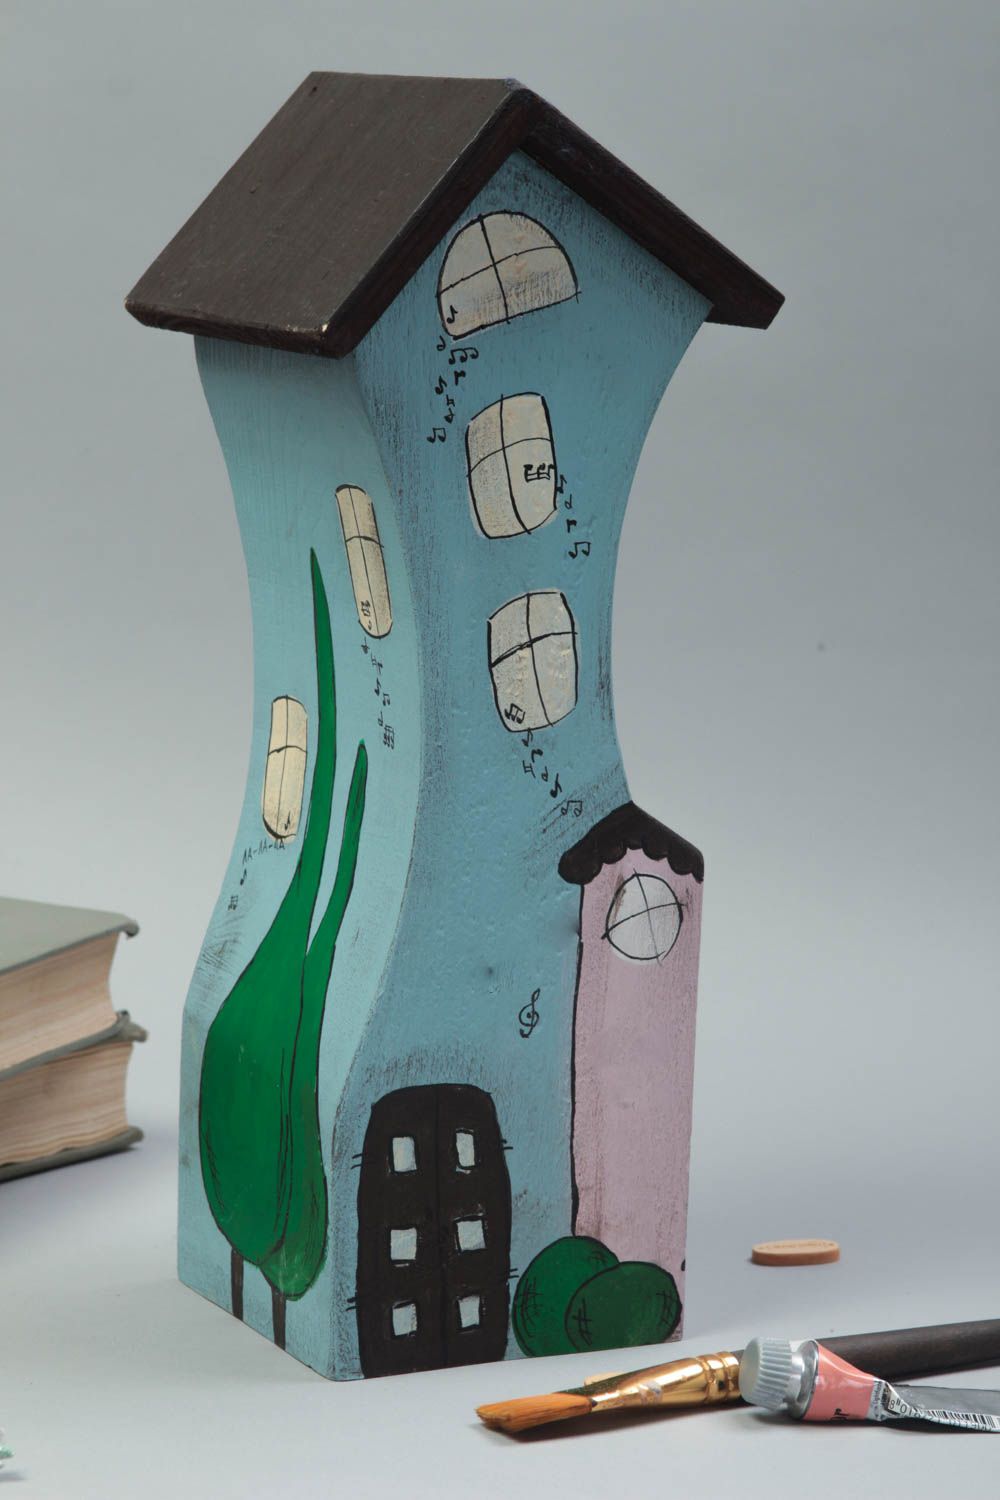 Wood sculpture homemade home decor miniature figurines housewarming gift ideas photo 1